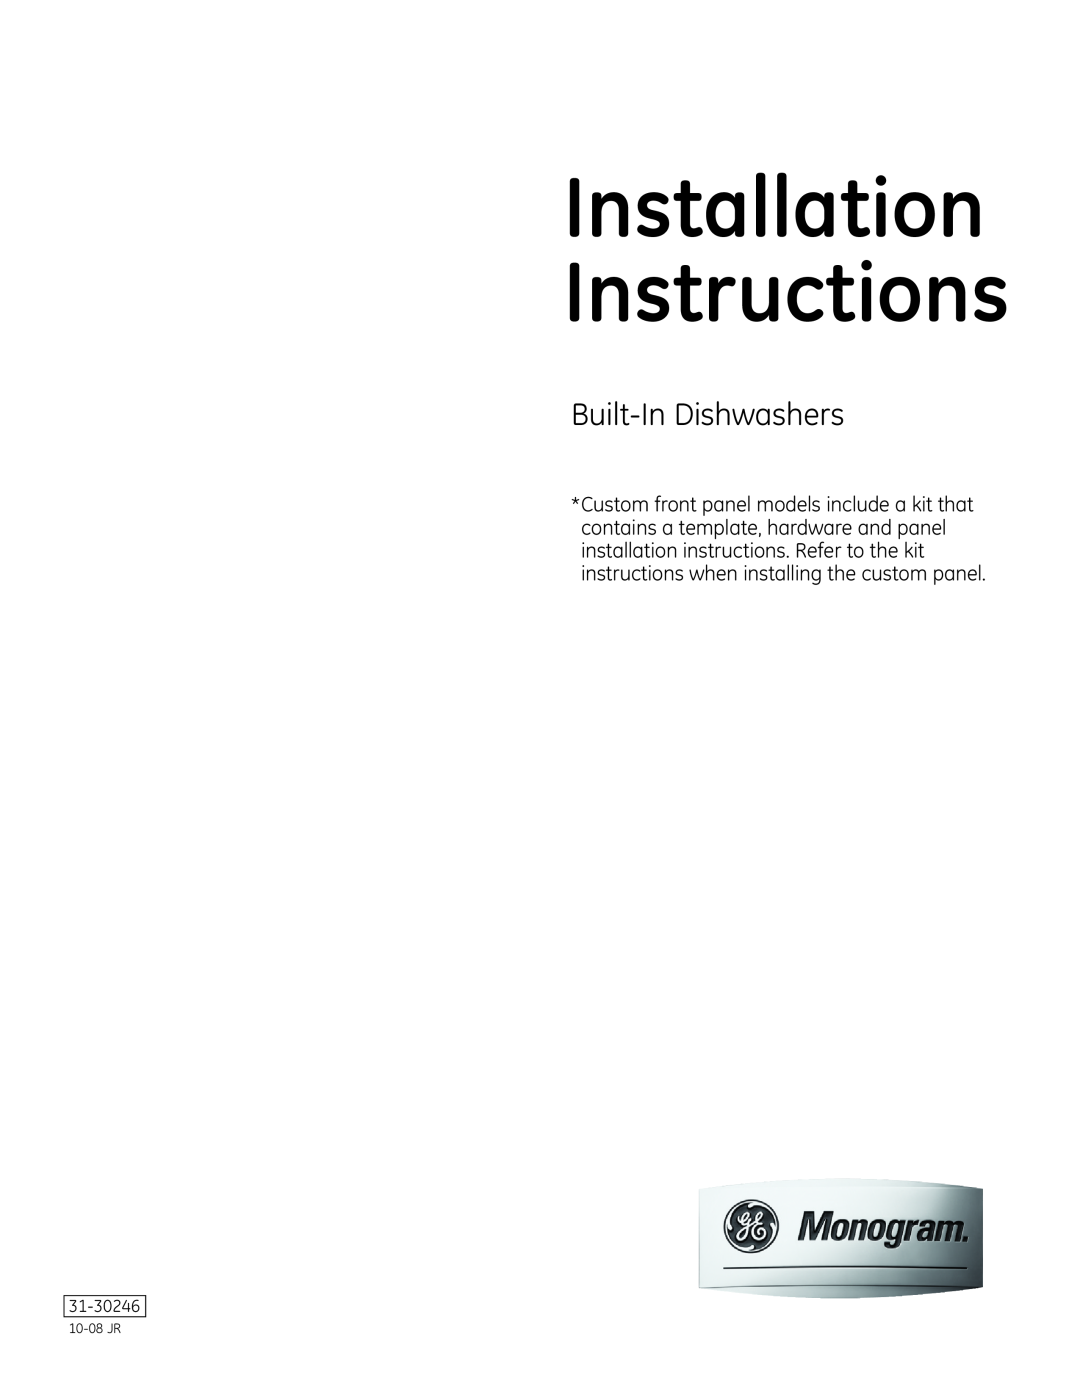 GE Monogram Built-In Dishwashers installation instructions Installation Instructions 